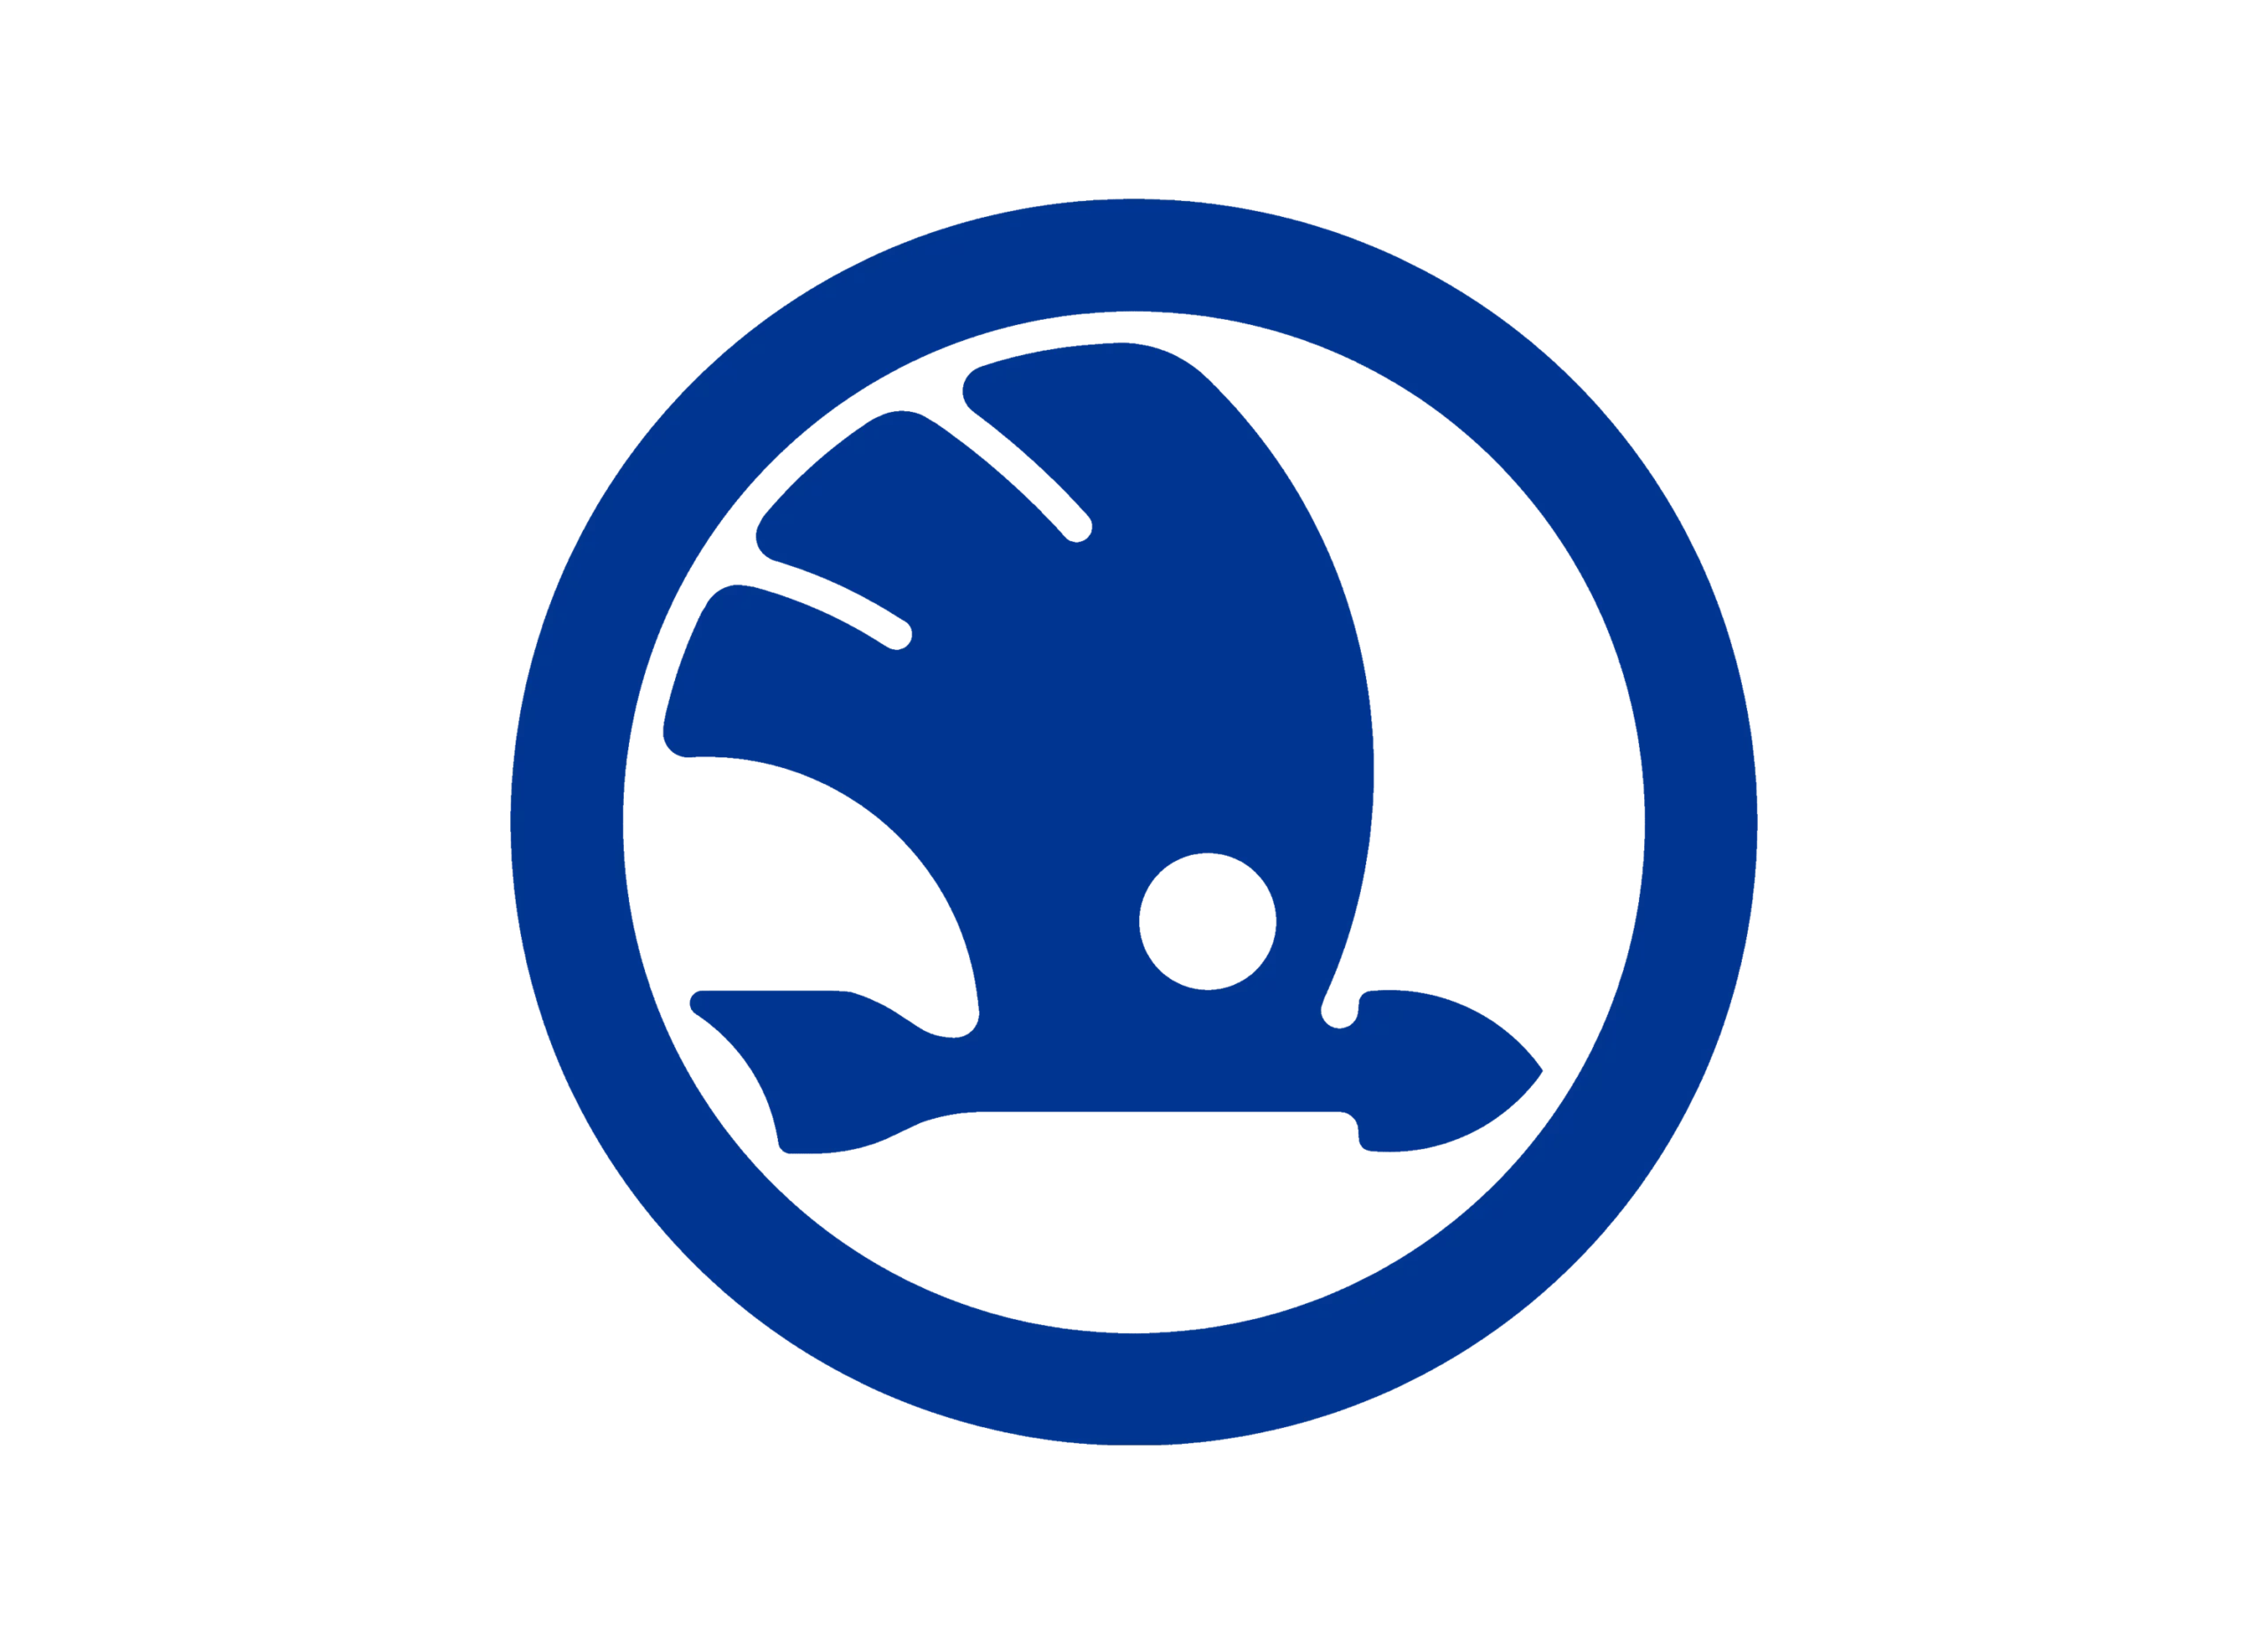 Skoda logo 1933-1986